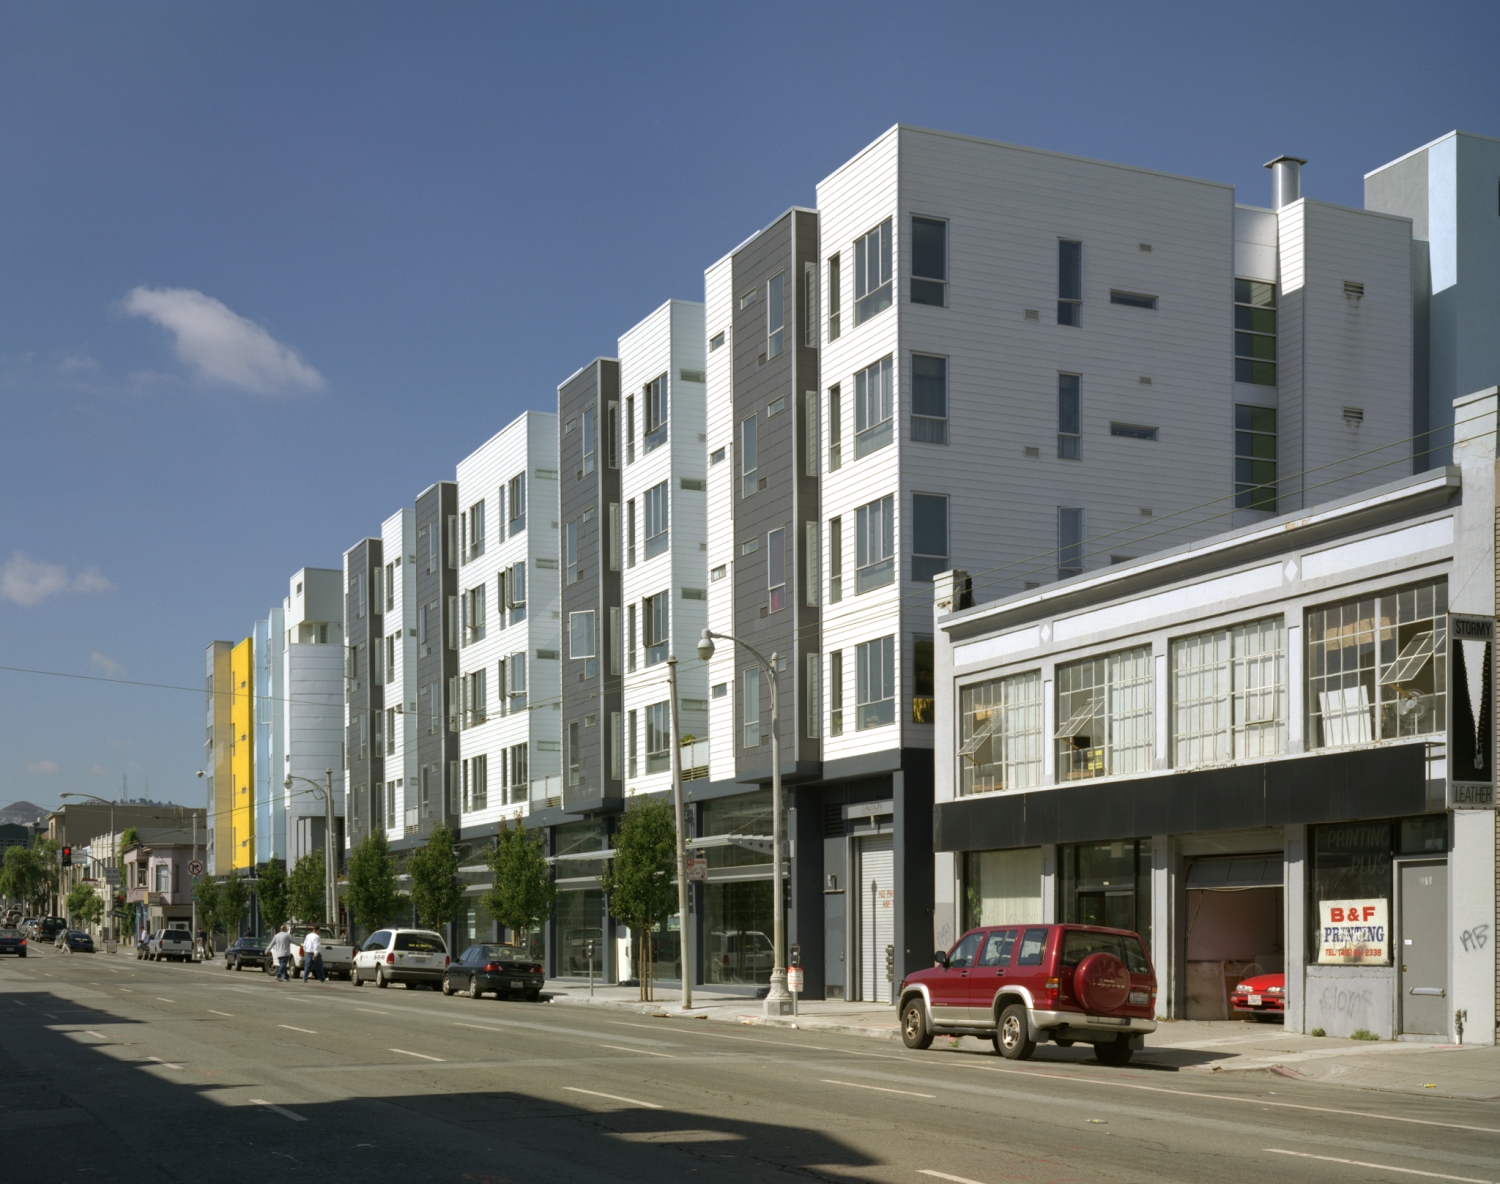 Exterior elevation of 8th & Howard/SOMA Studios in San Francisco, Ca.